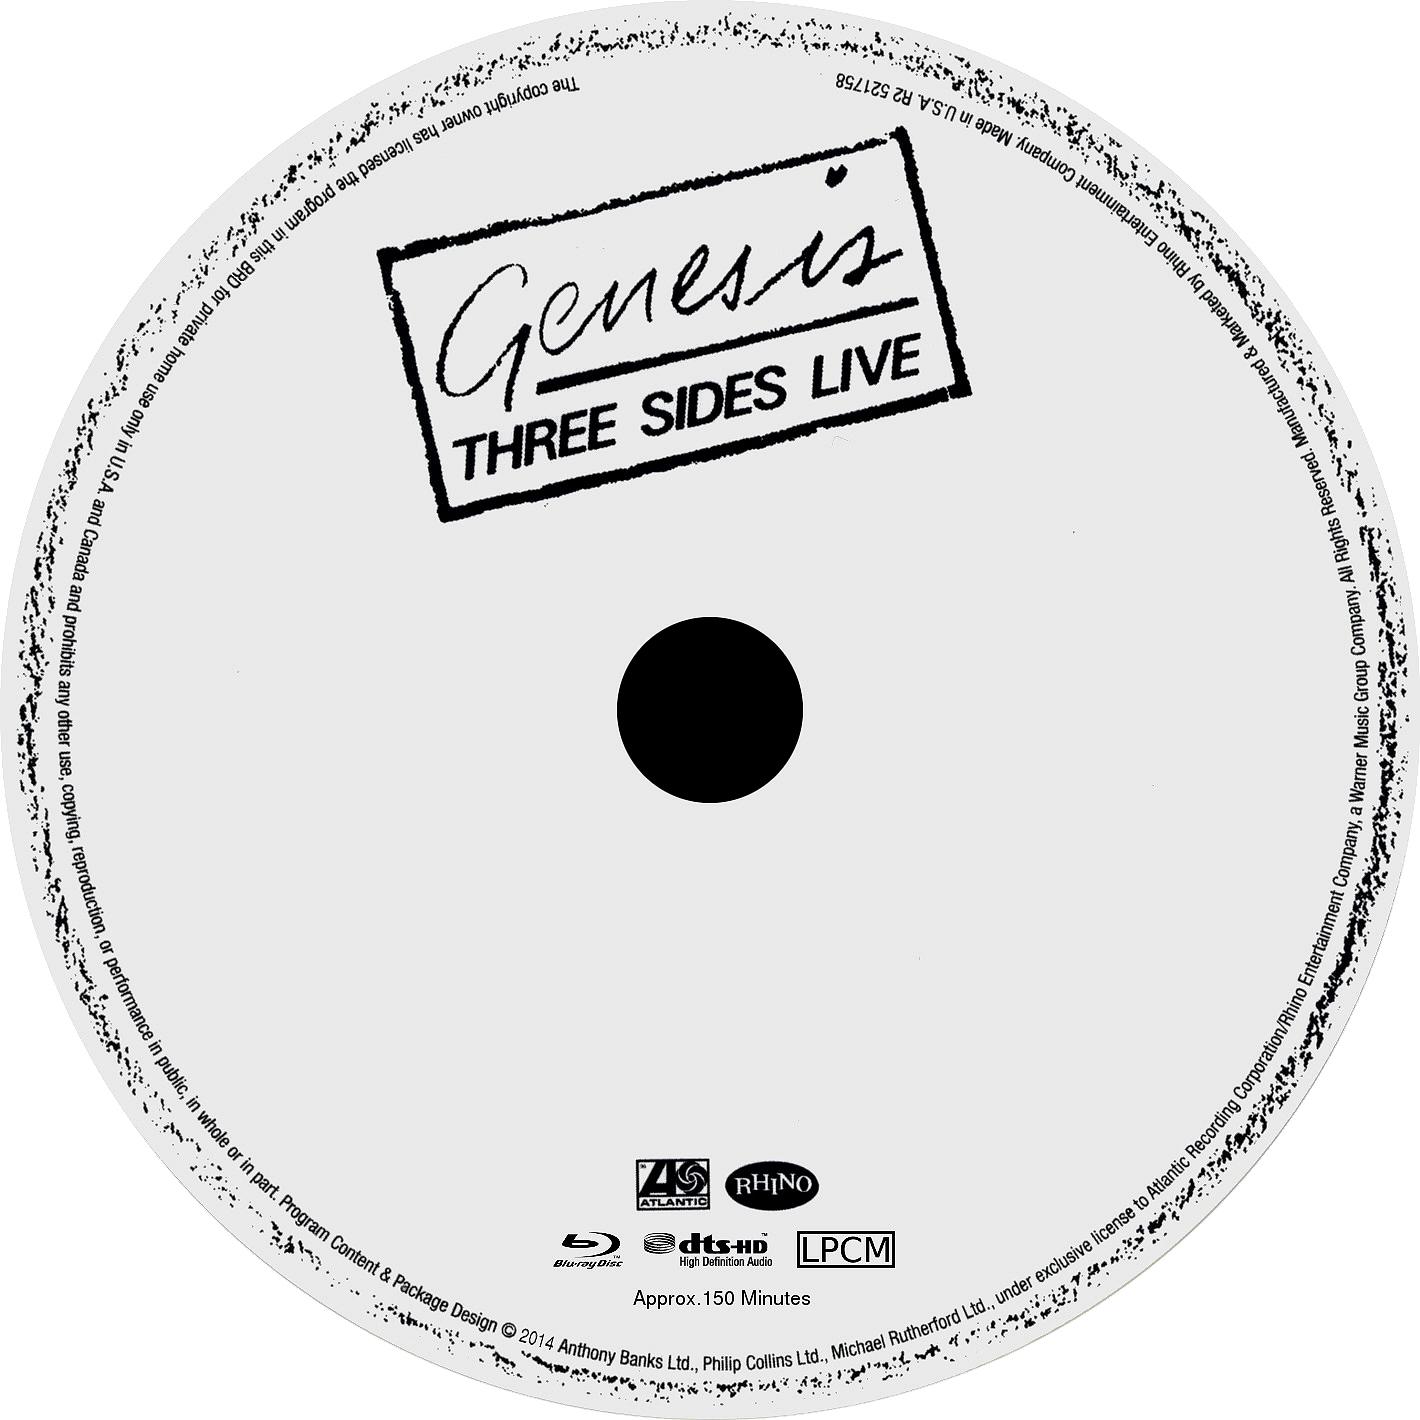 Three sides. Genesis three Sides Live 1982. Genesis "three Sides Live". Genesis - three Sides Live (1982)DVD. Genesis three Sides Live LP.